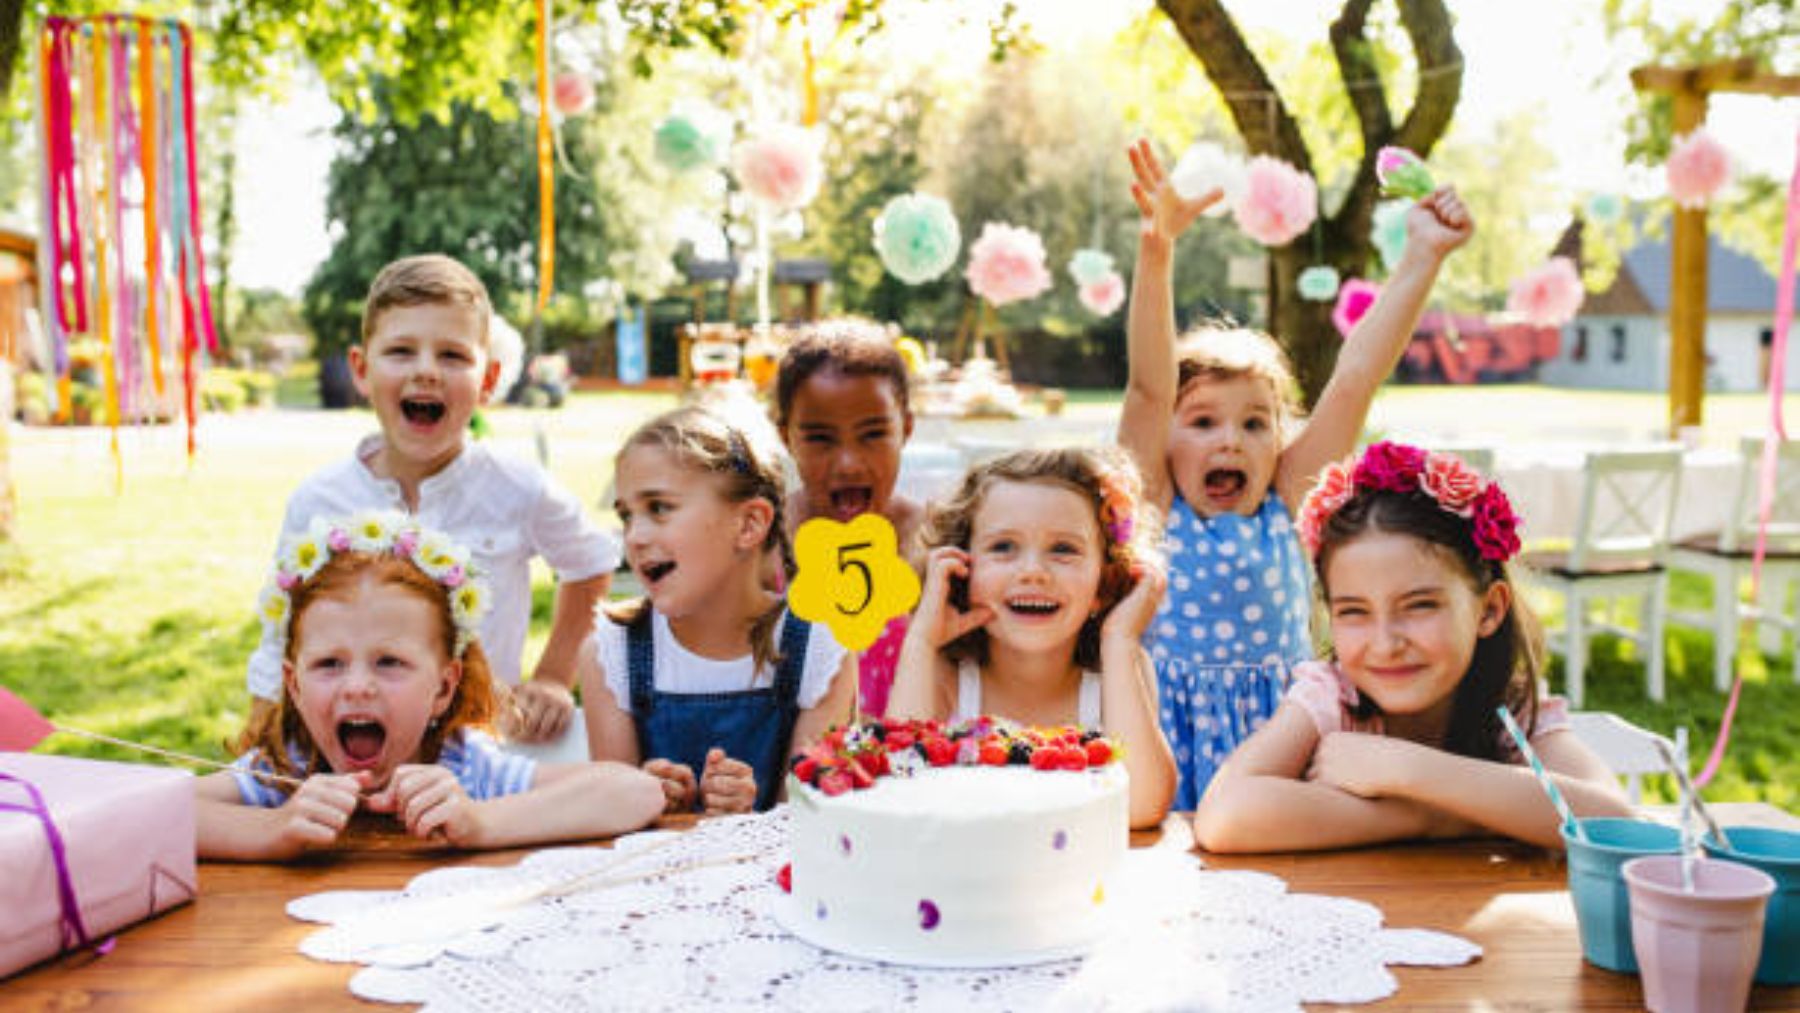 Quince ideas para montar un cumpleaños infantil en casa - Foto 1